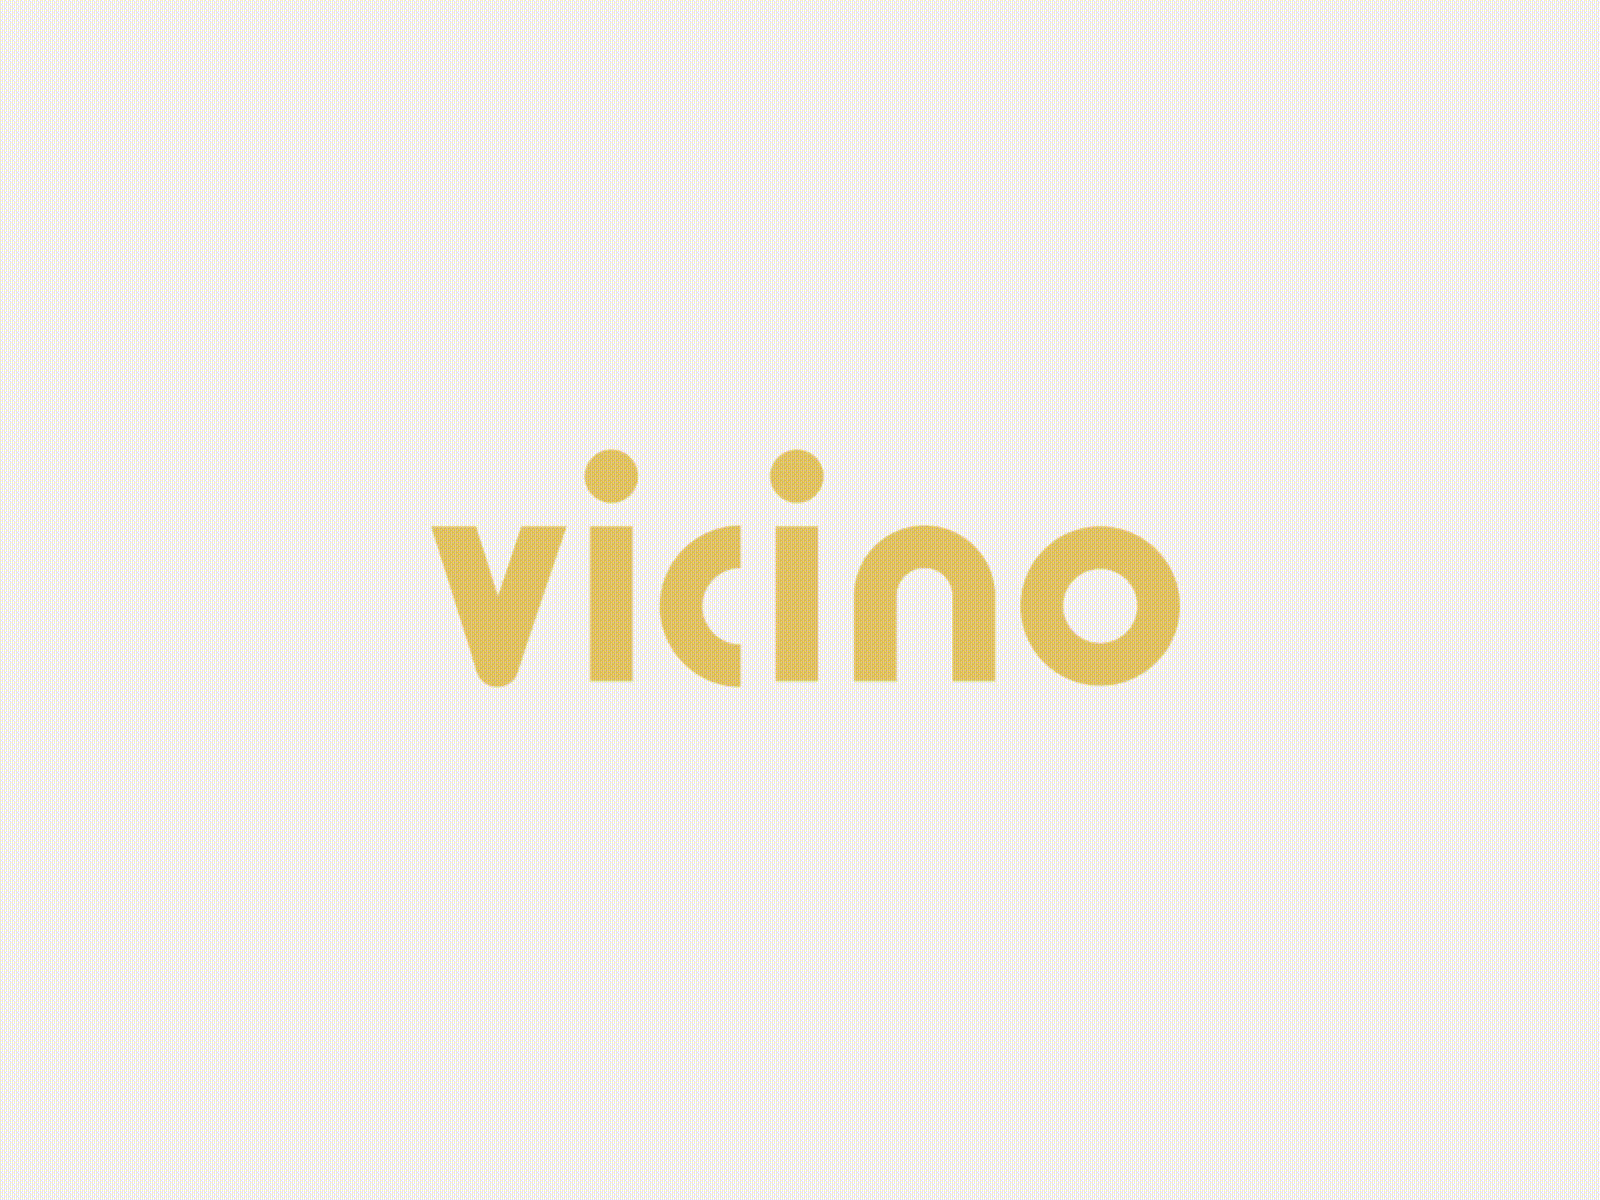 Vicino logo animated